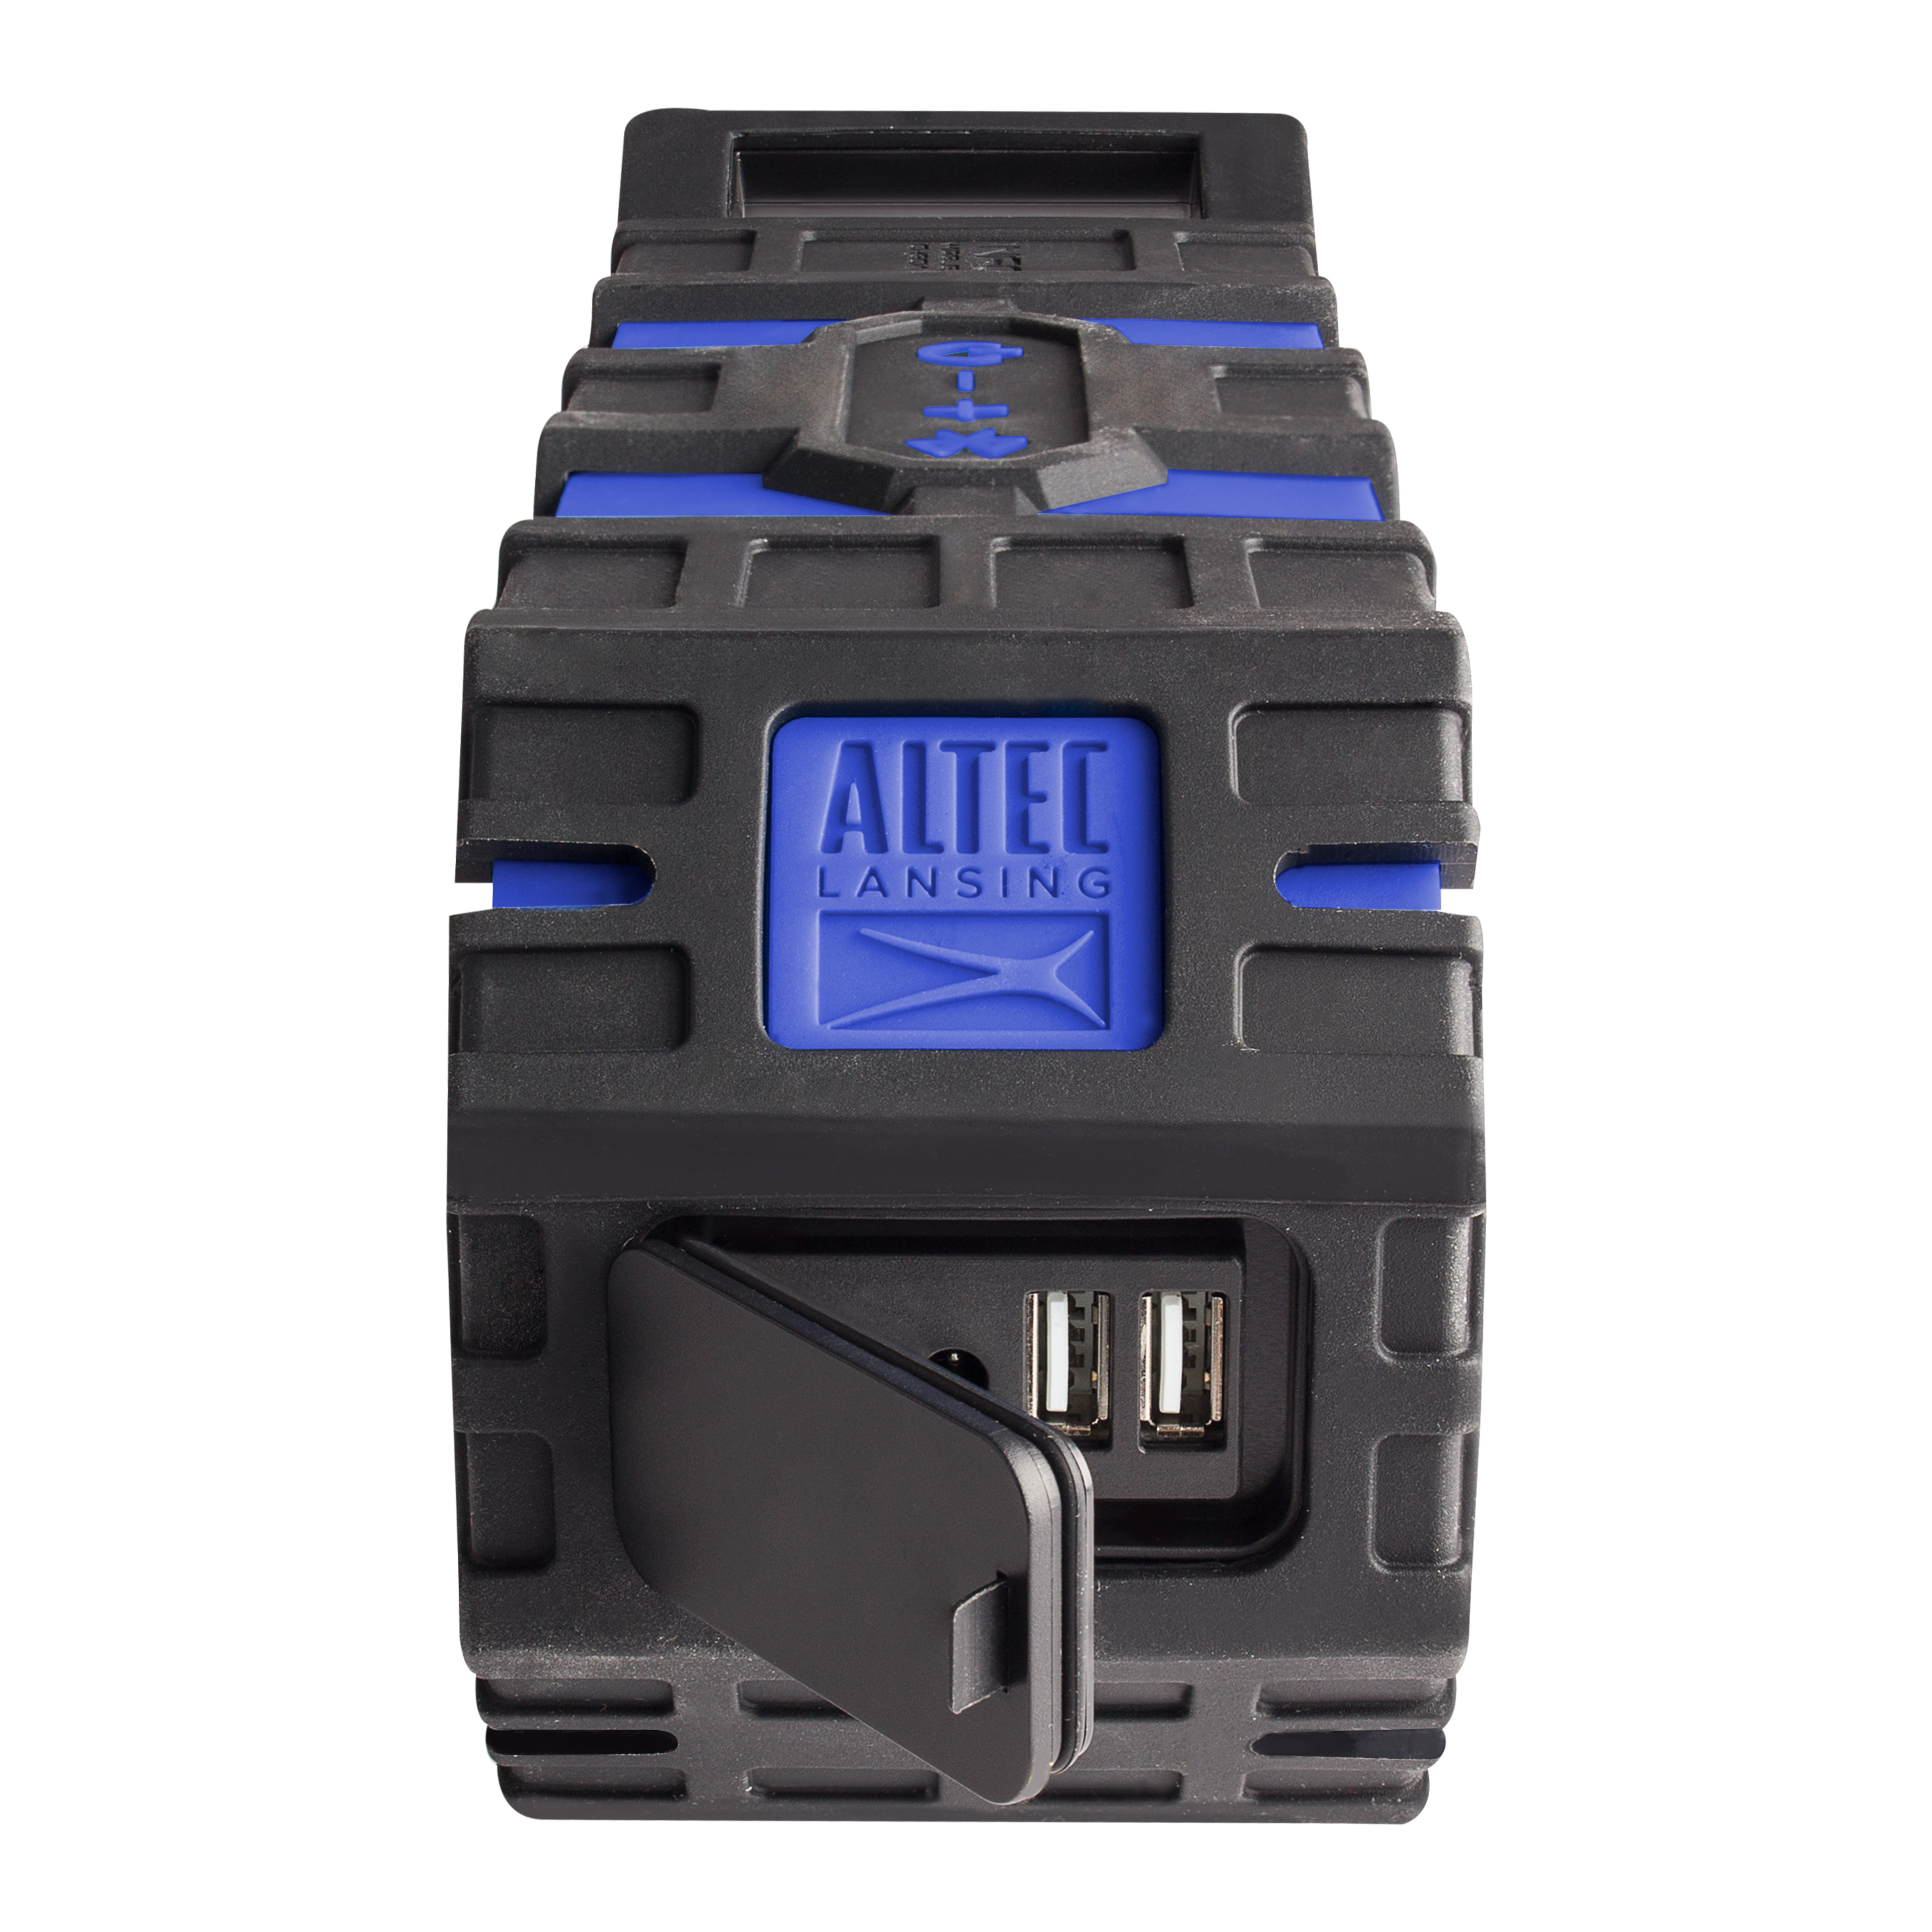 Altec Lansing Portable Bluetooth Speaker, Black, IMW789-WM - image 3 of 6